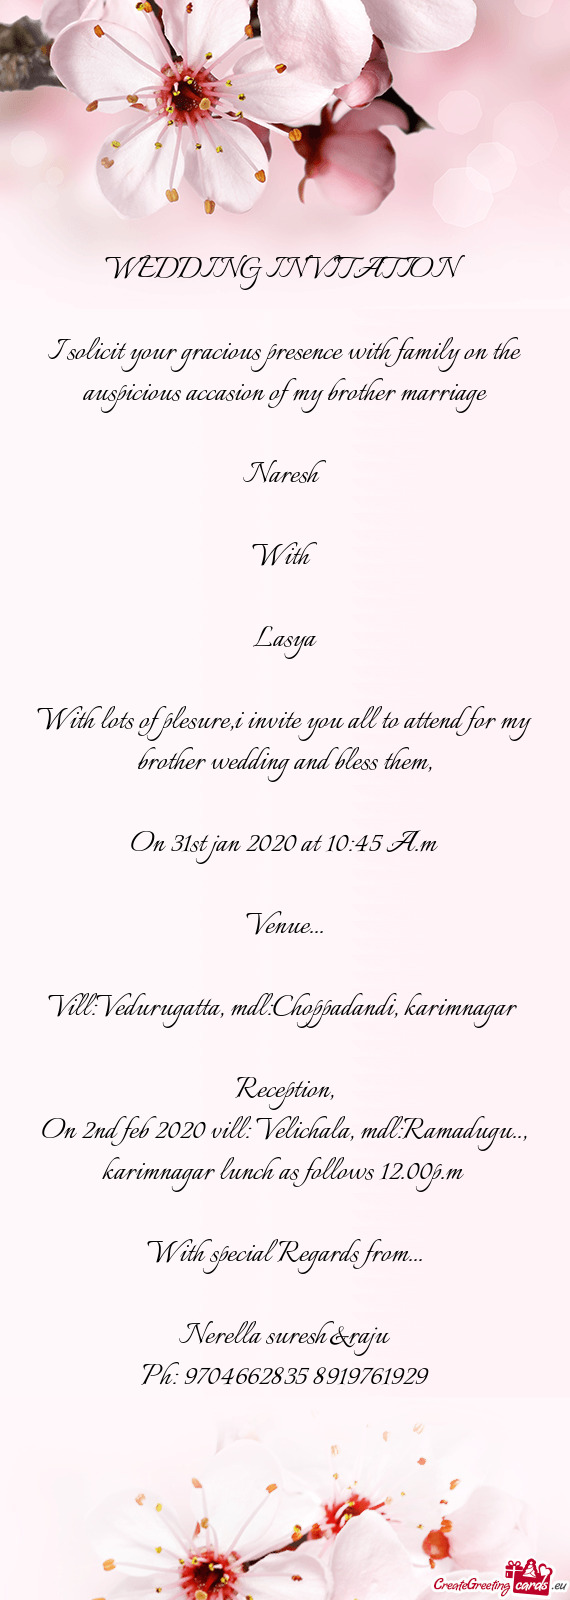 On 2nd feb 2020 vill: Velichala, mdl:Ramadugu.., karimnagar lunch as follows 12.00p.m